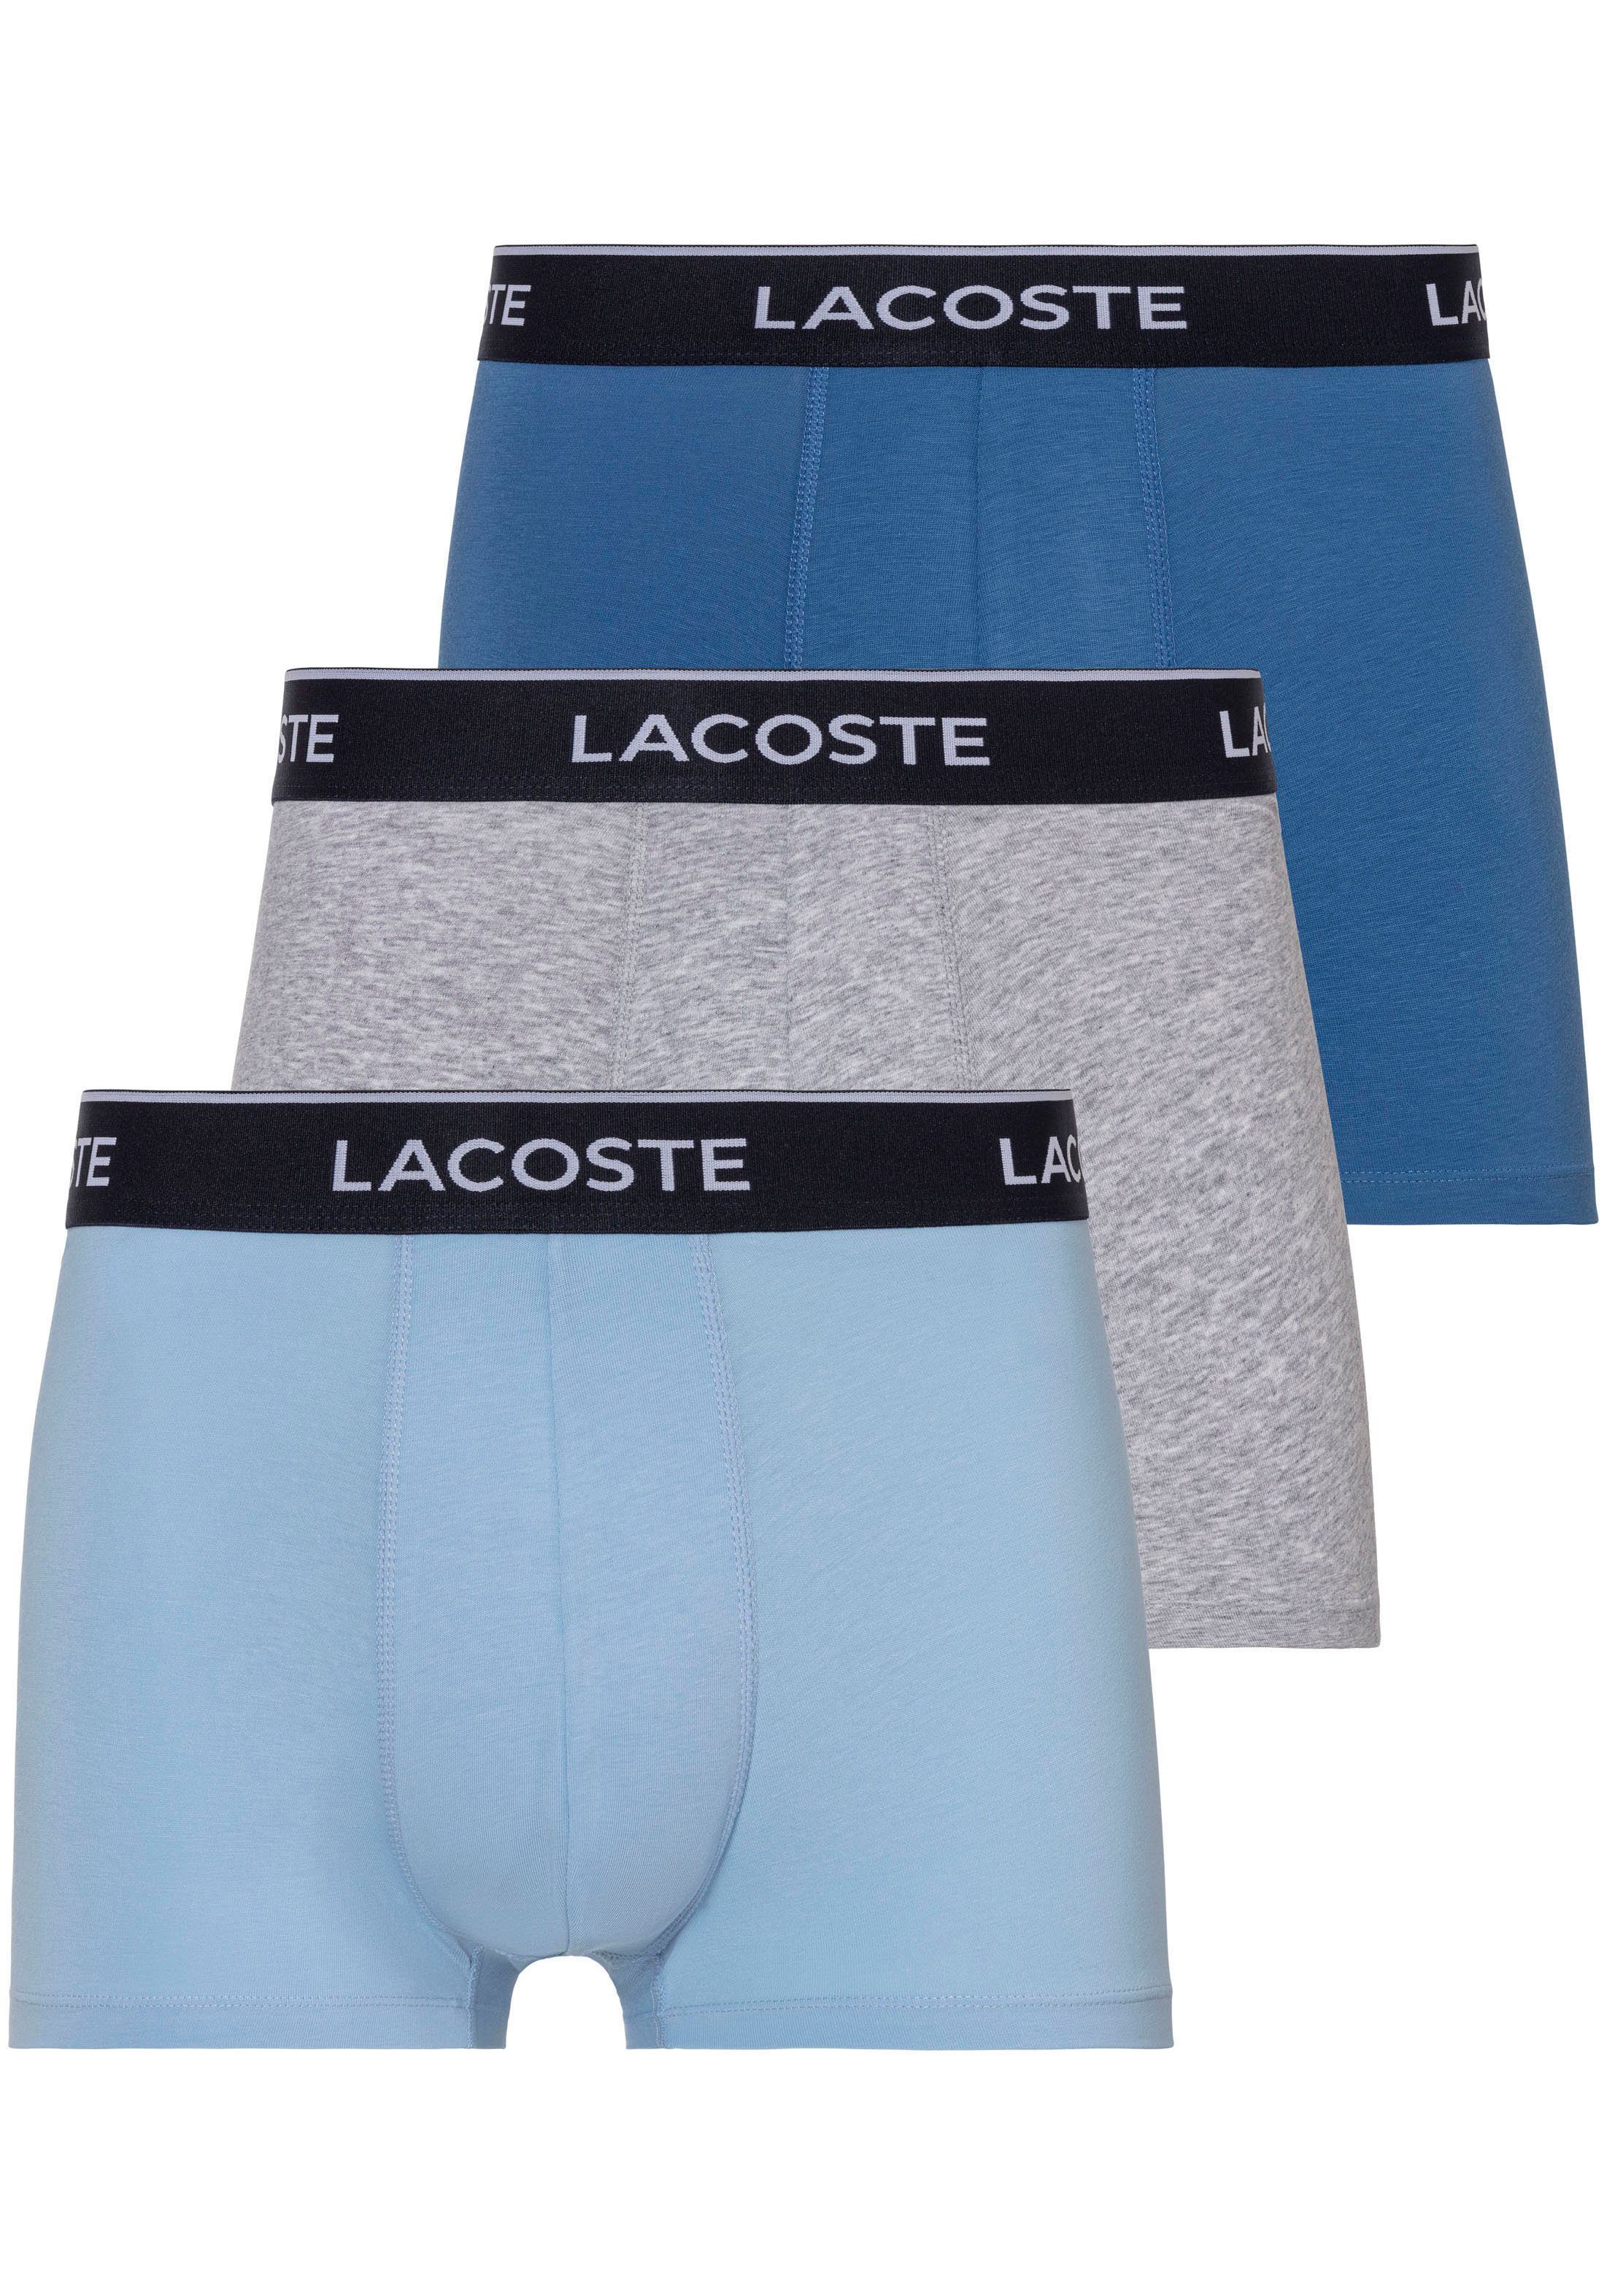 Lacoste Trunk eng Boxershorts Lacoste grau-blau-hb atmungsaktivem 3er-Pack) 3-St., Herren Premium Material (Packung, aus